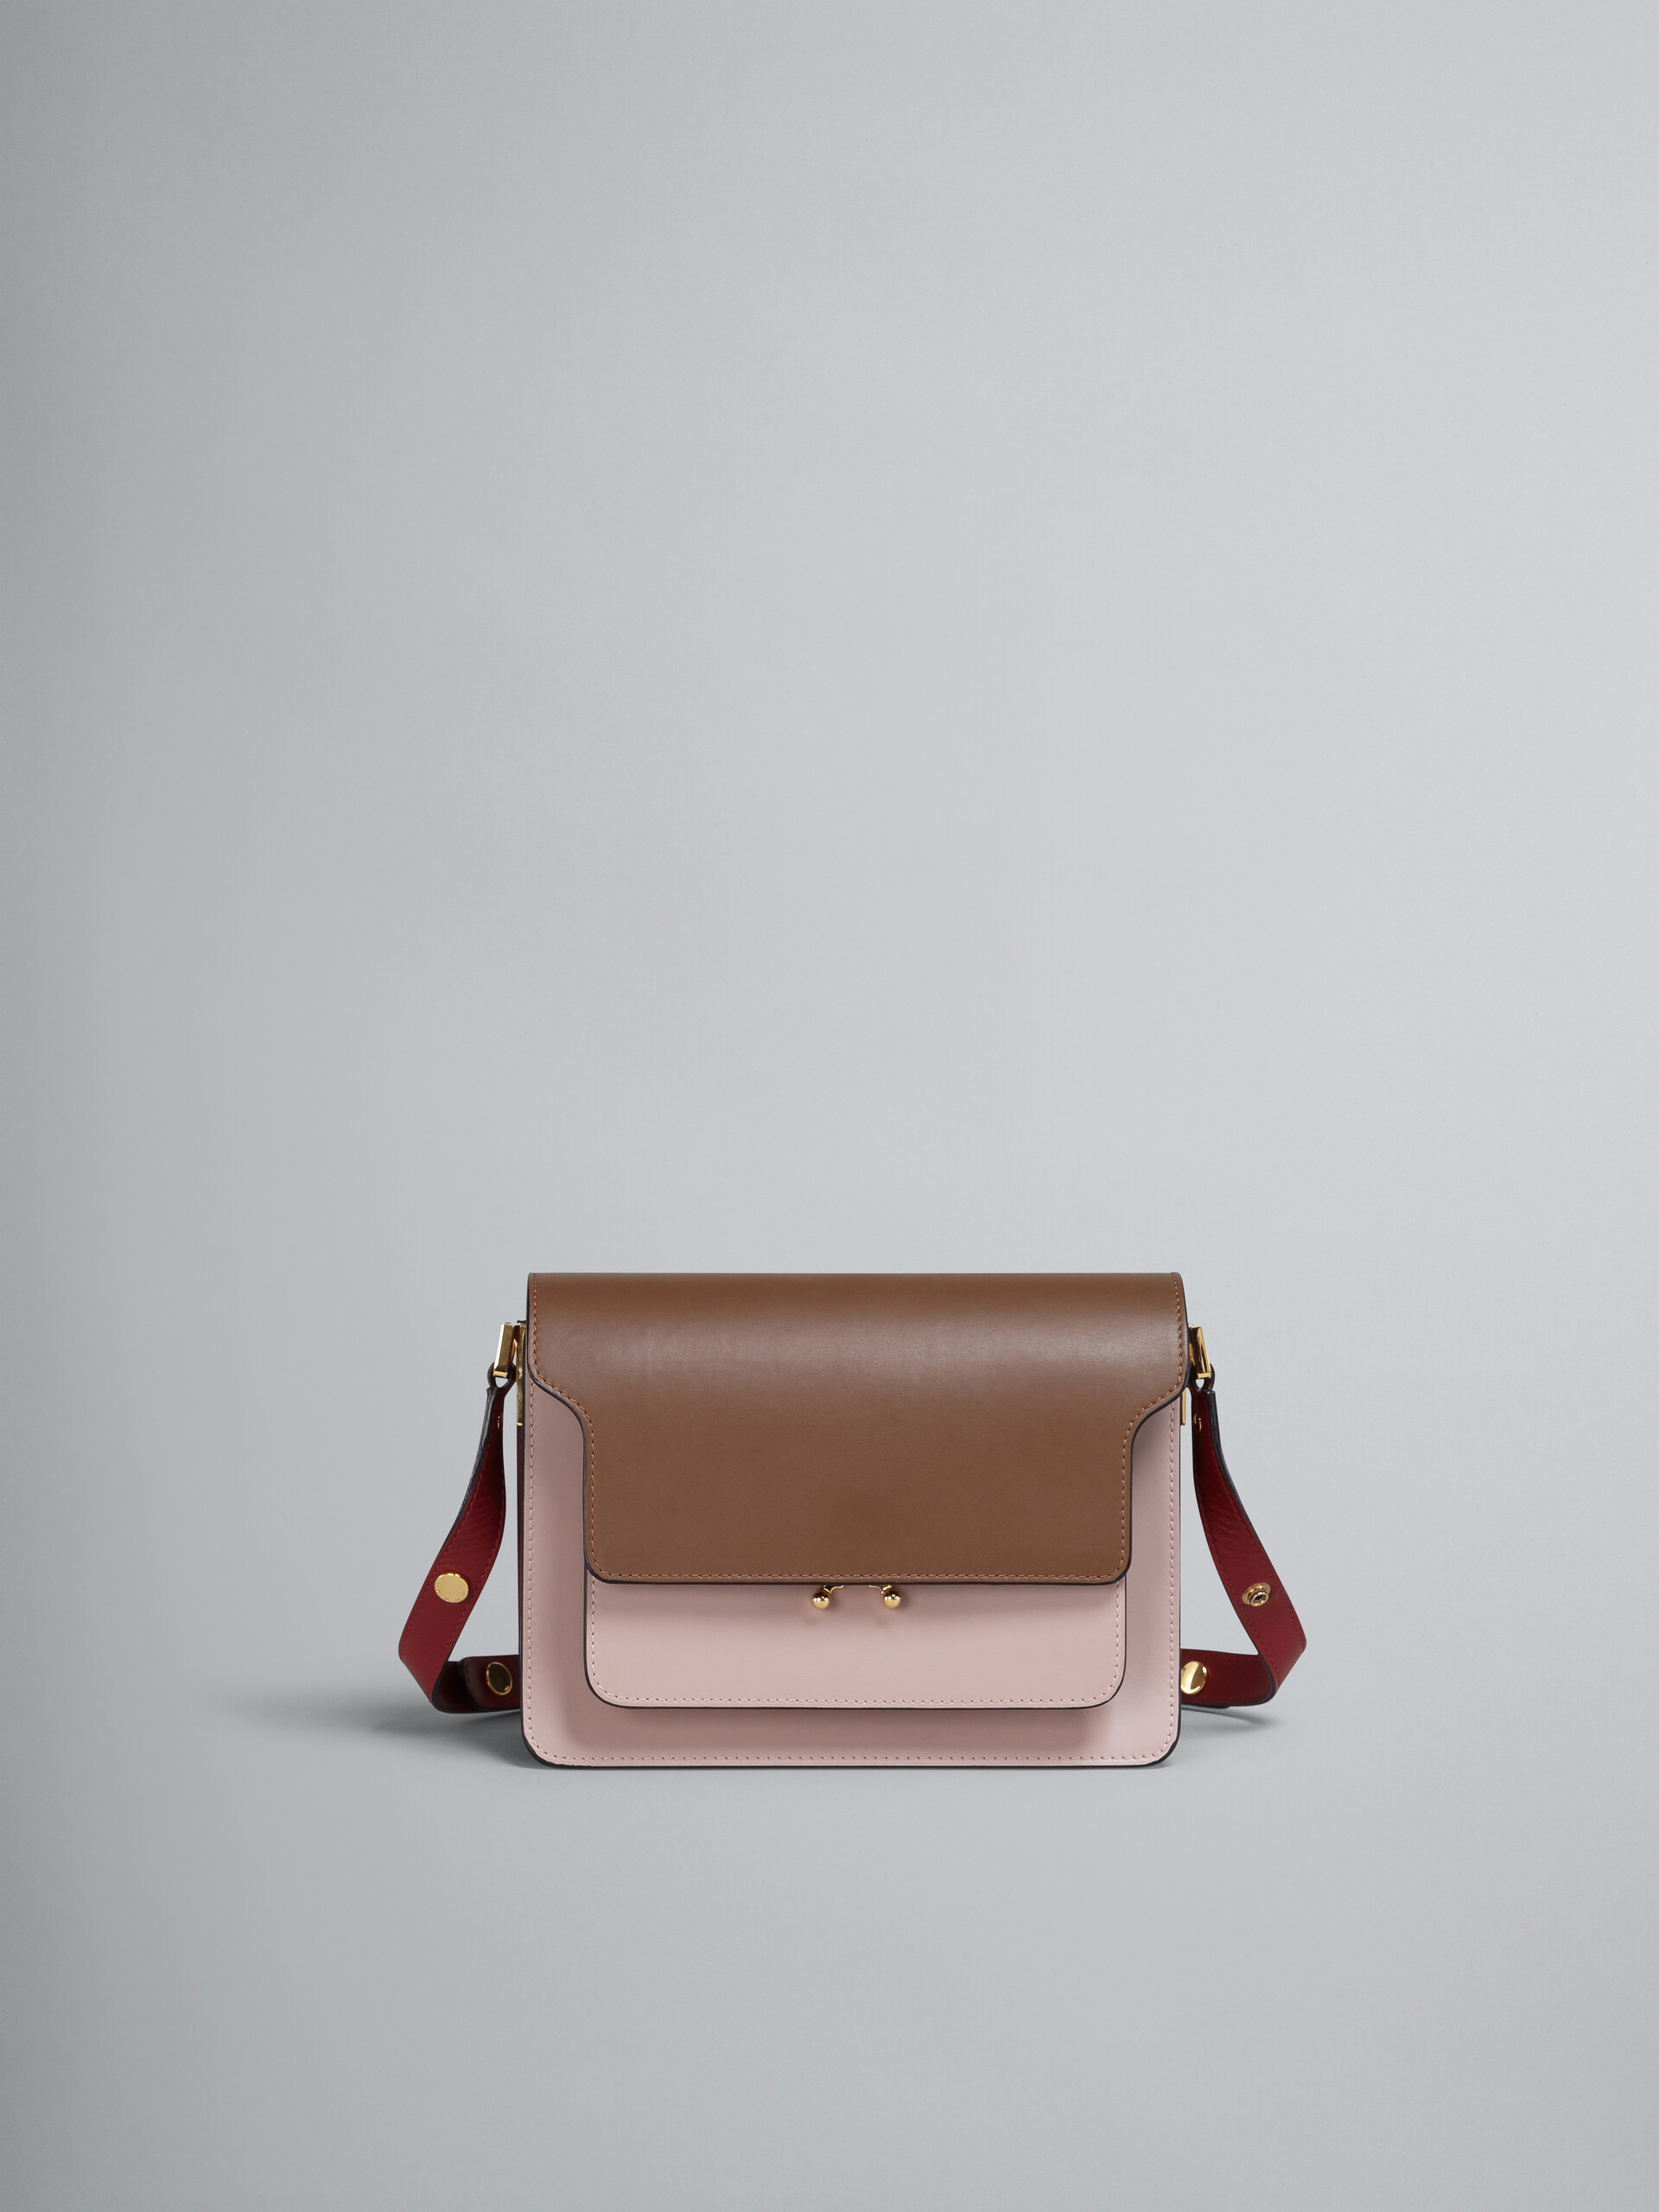 TRUNK medium bag in brown pink and red leather - Shoulder Bag - Image 1